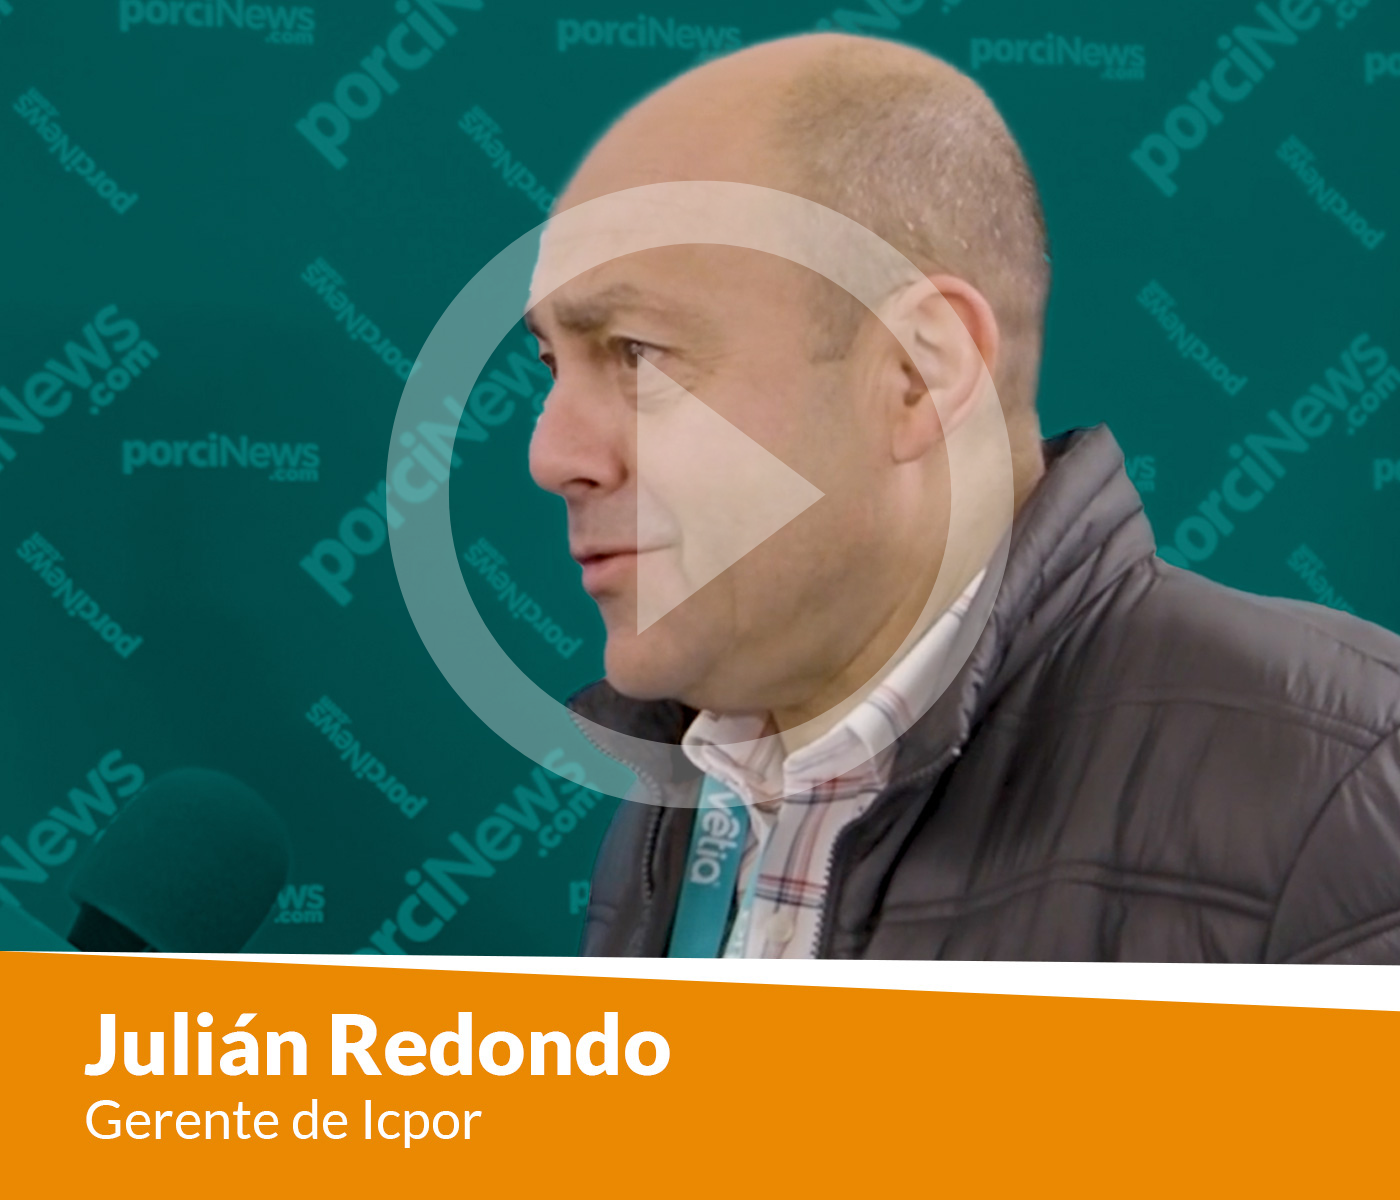 Julián Redondo